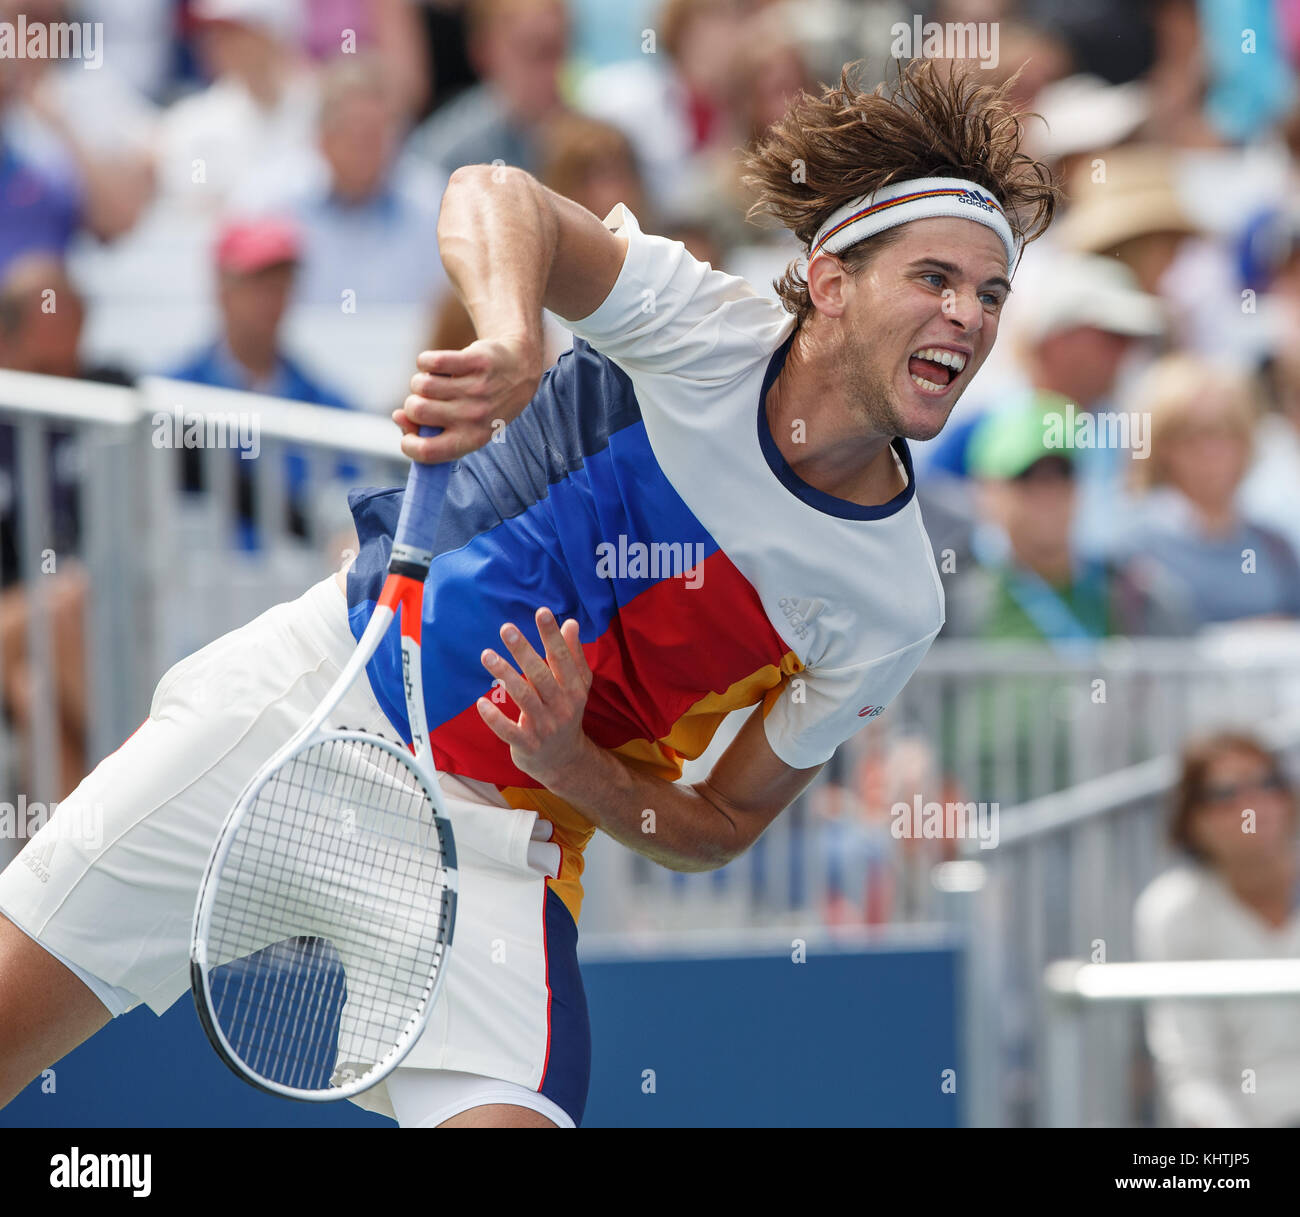 Austrian tennis player DOMINIC THIEM (AUT) serving during men's singles match at US Open 2017 Tennis Championship, New York City, New York State, Unit Stock Photo